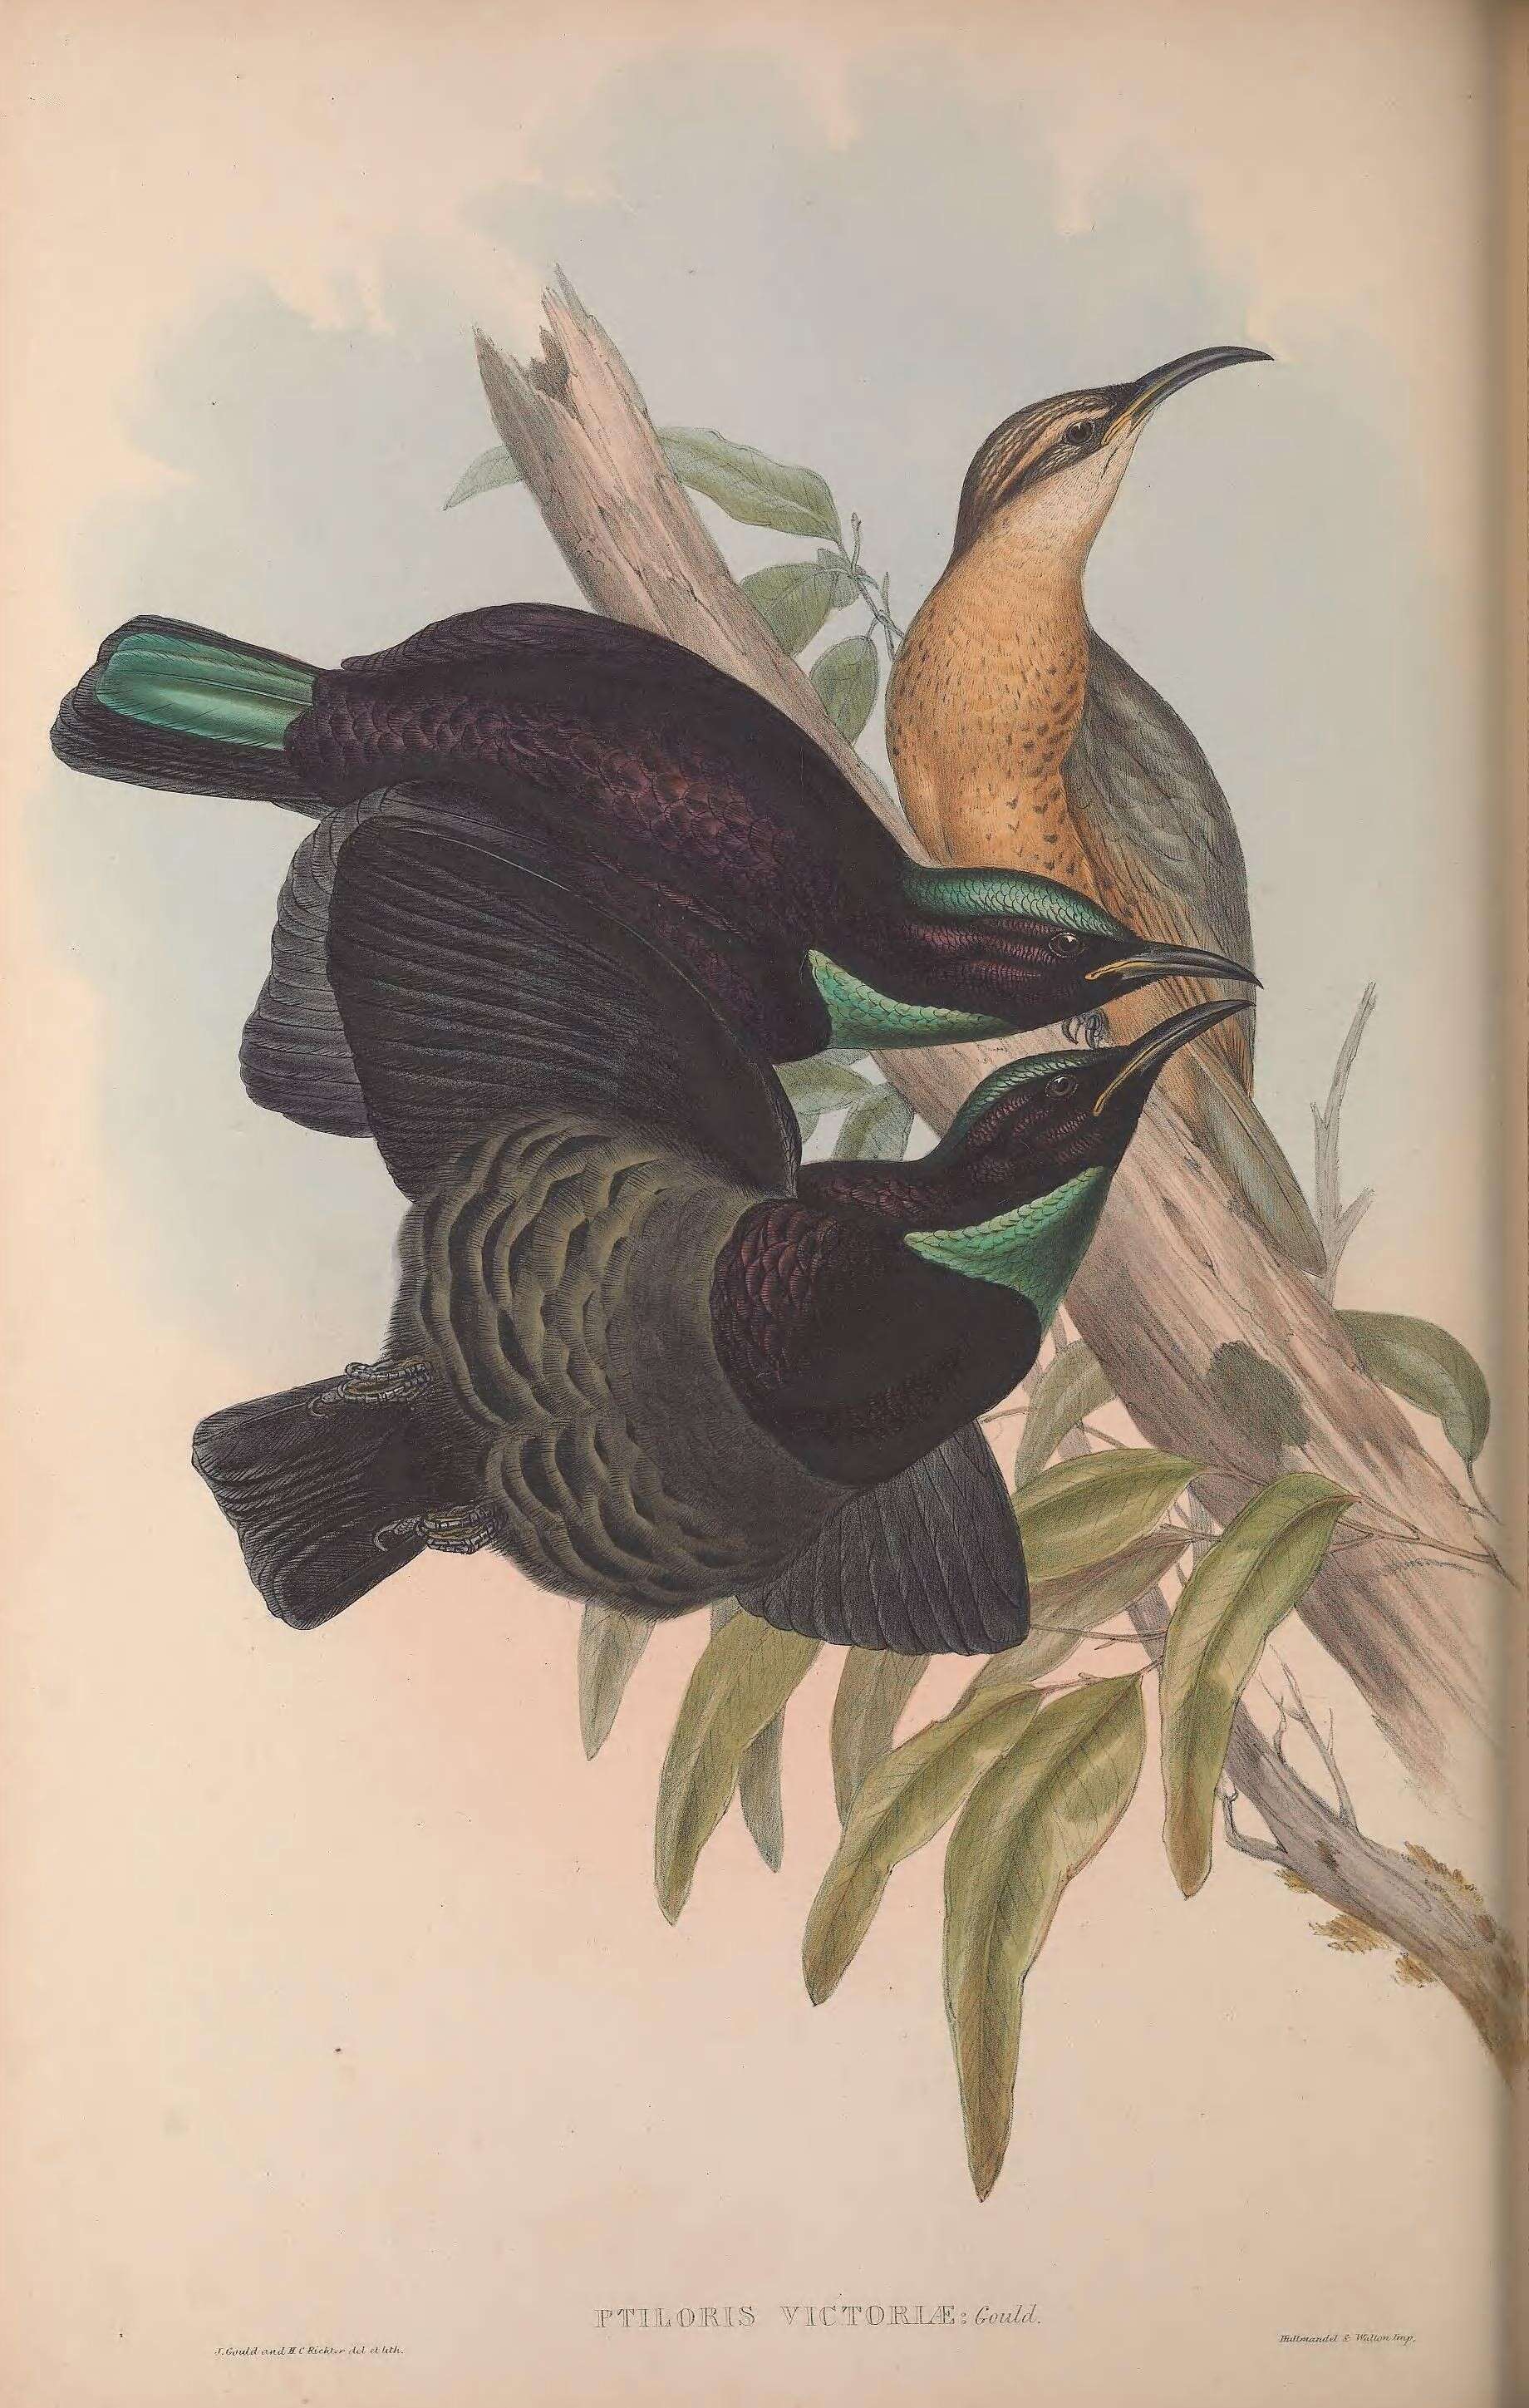 Image of Victoria's Riflebird